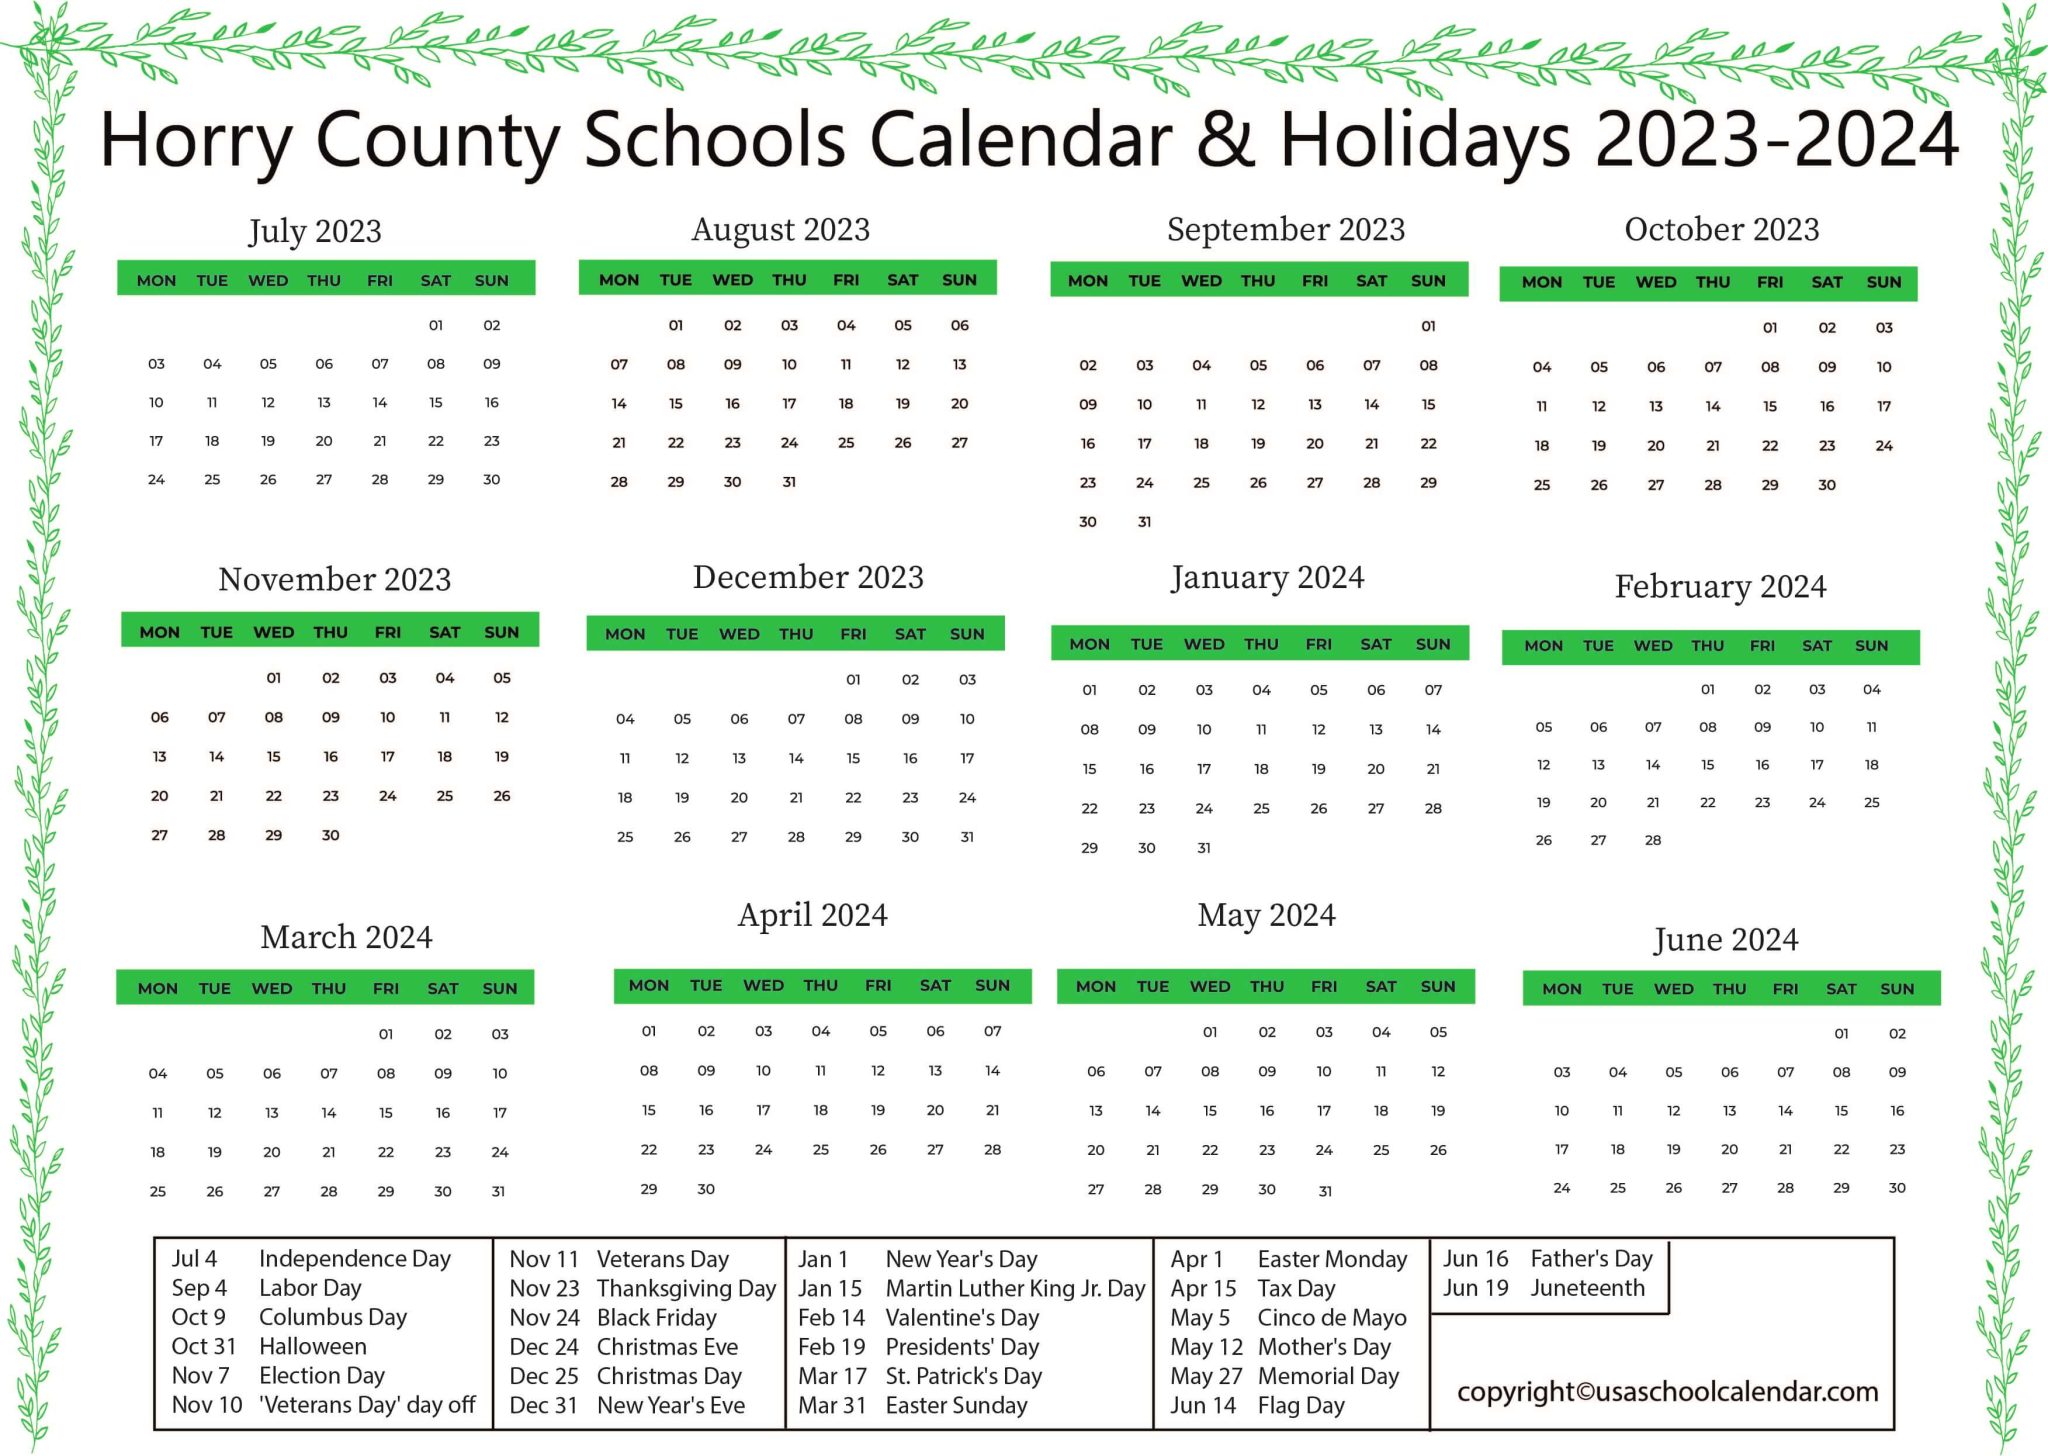 Horry County Schools Calendar Holidays 2023 2024